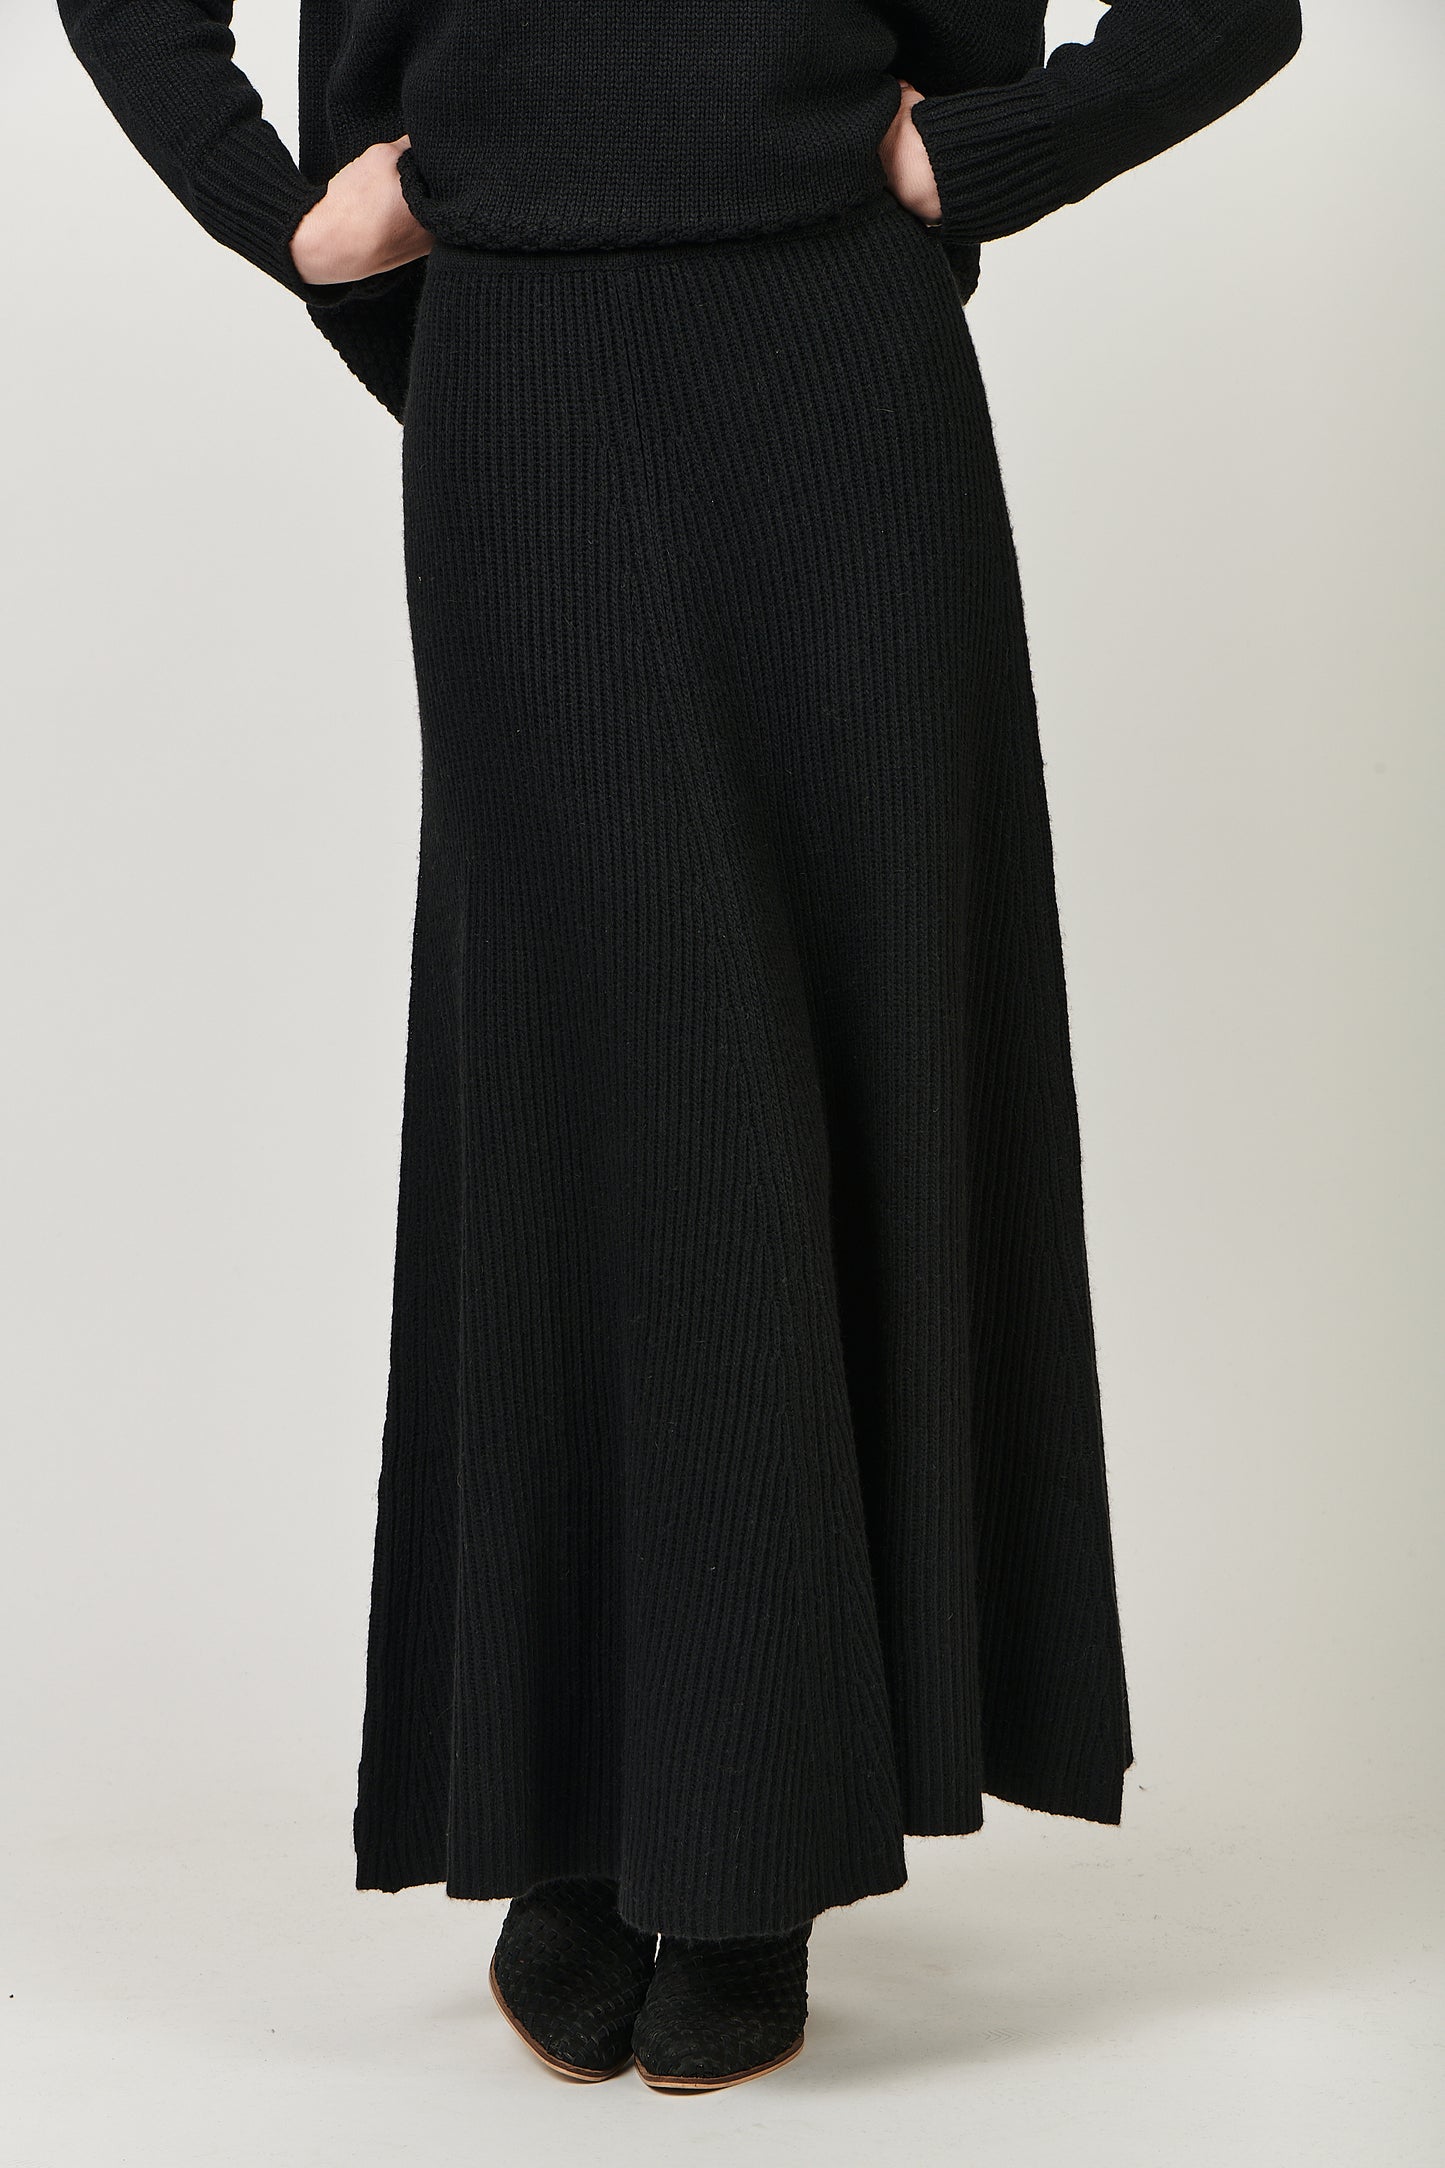 Cashmere Blend Skirt RE-48 Black